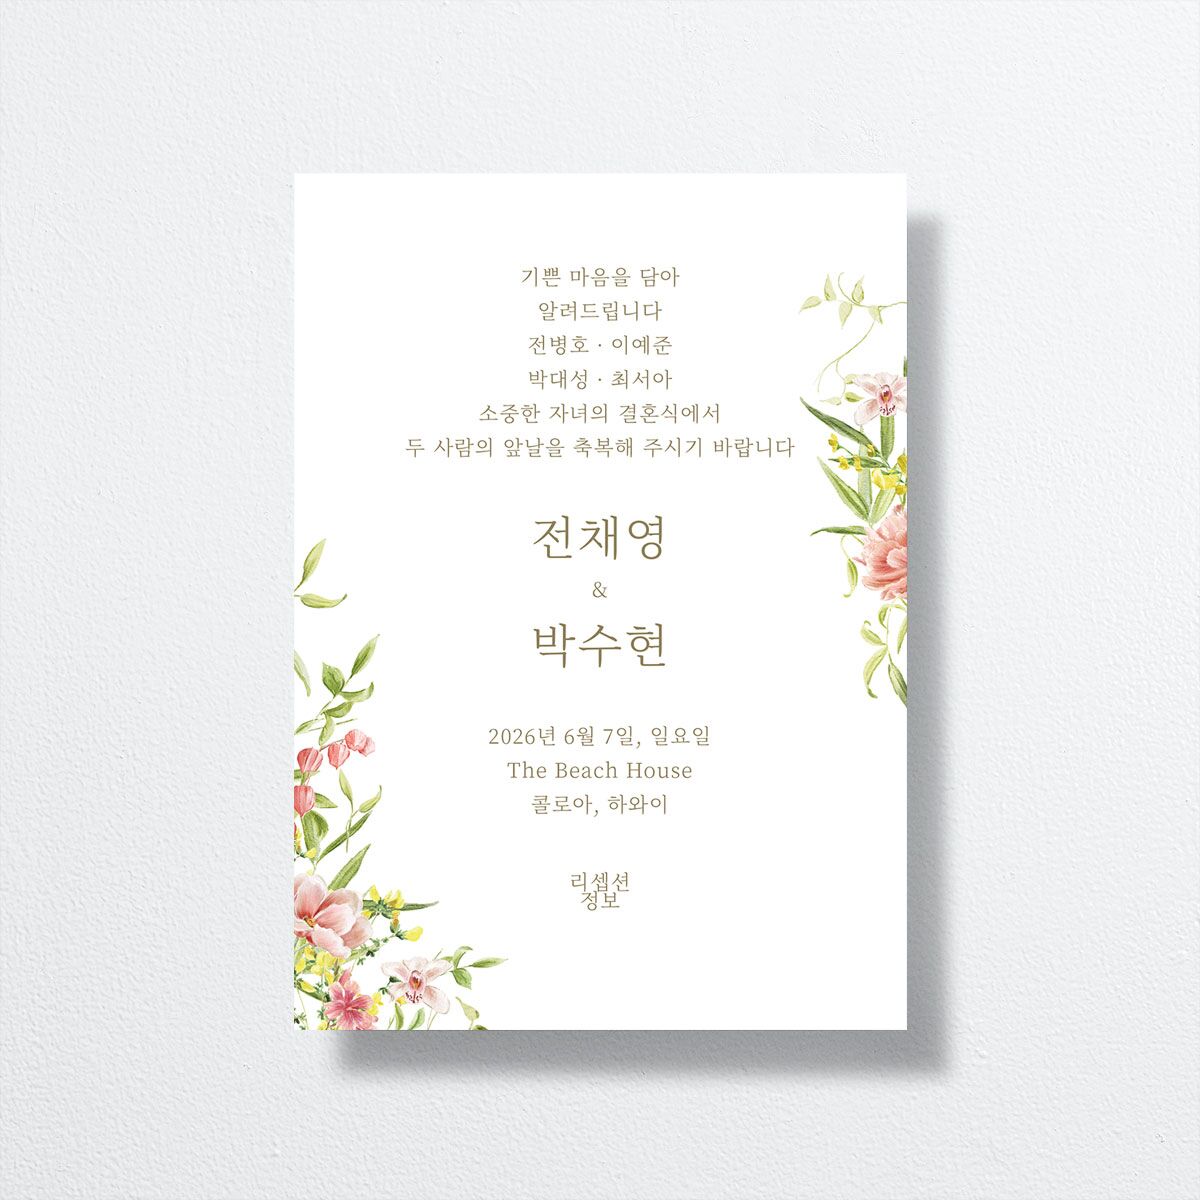 Bom Bloom Wedding Invitations back in pink